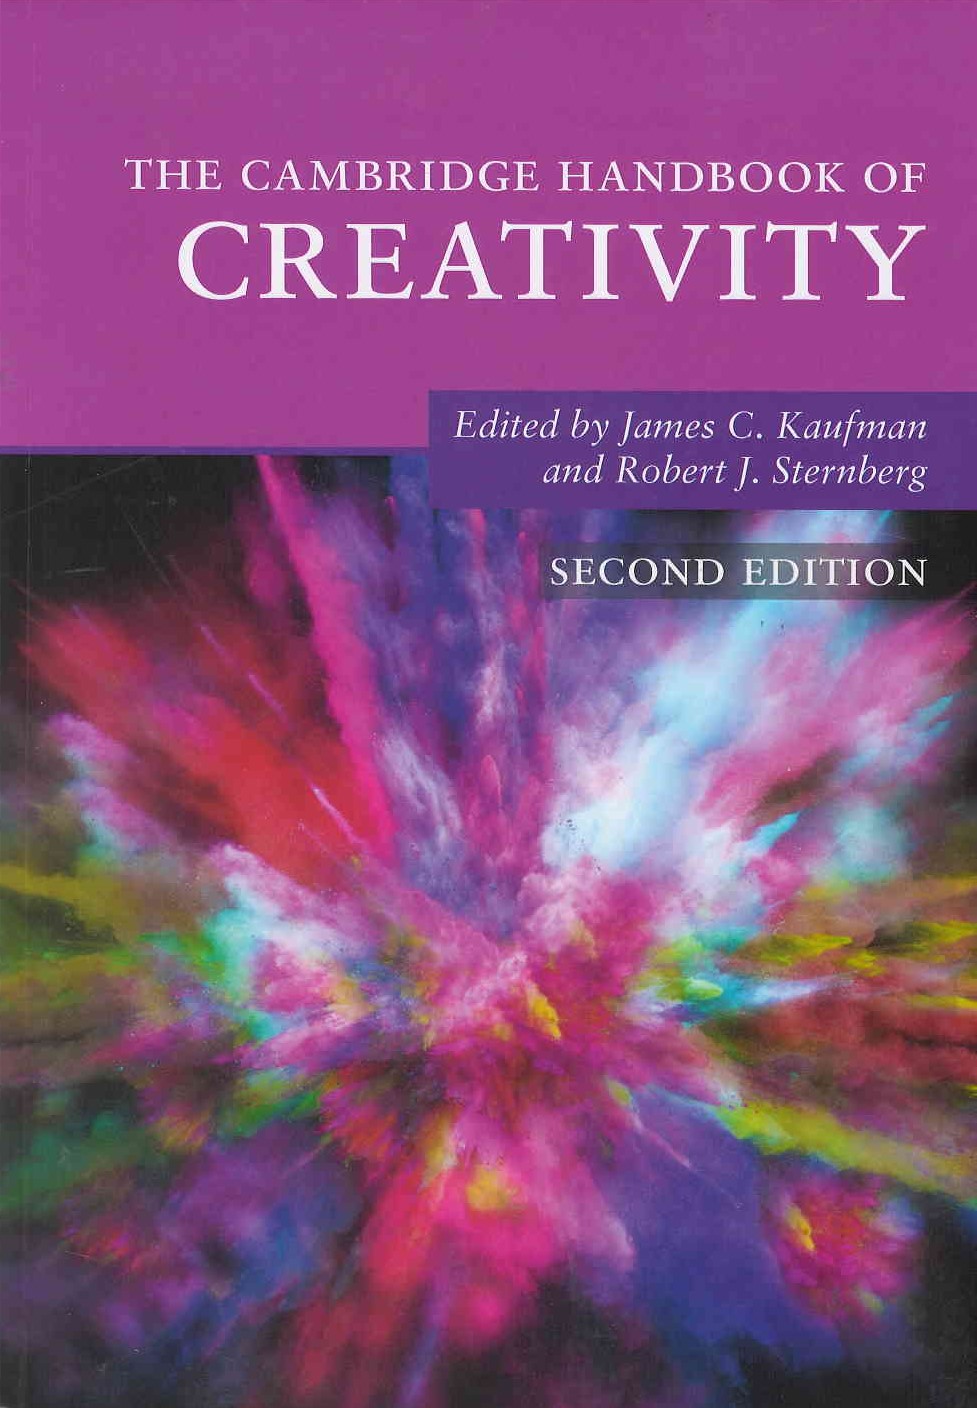 The Cambridge handbook of creativity